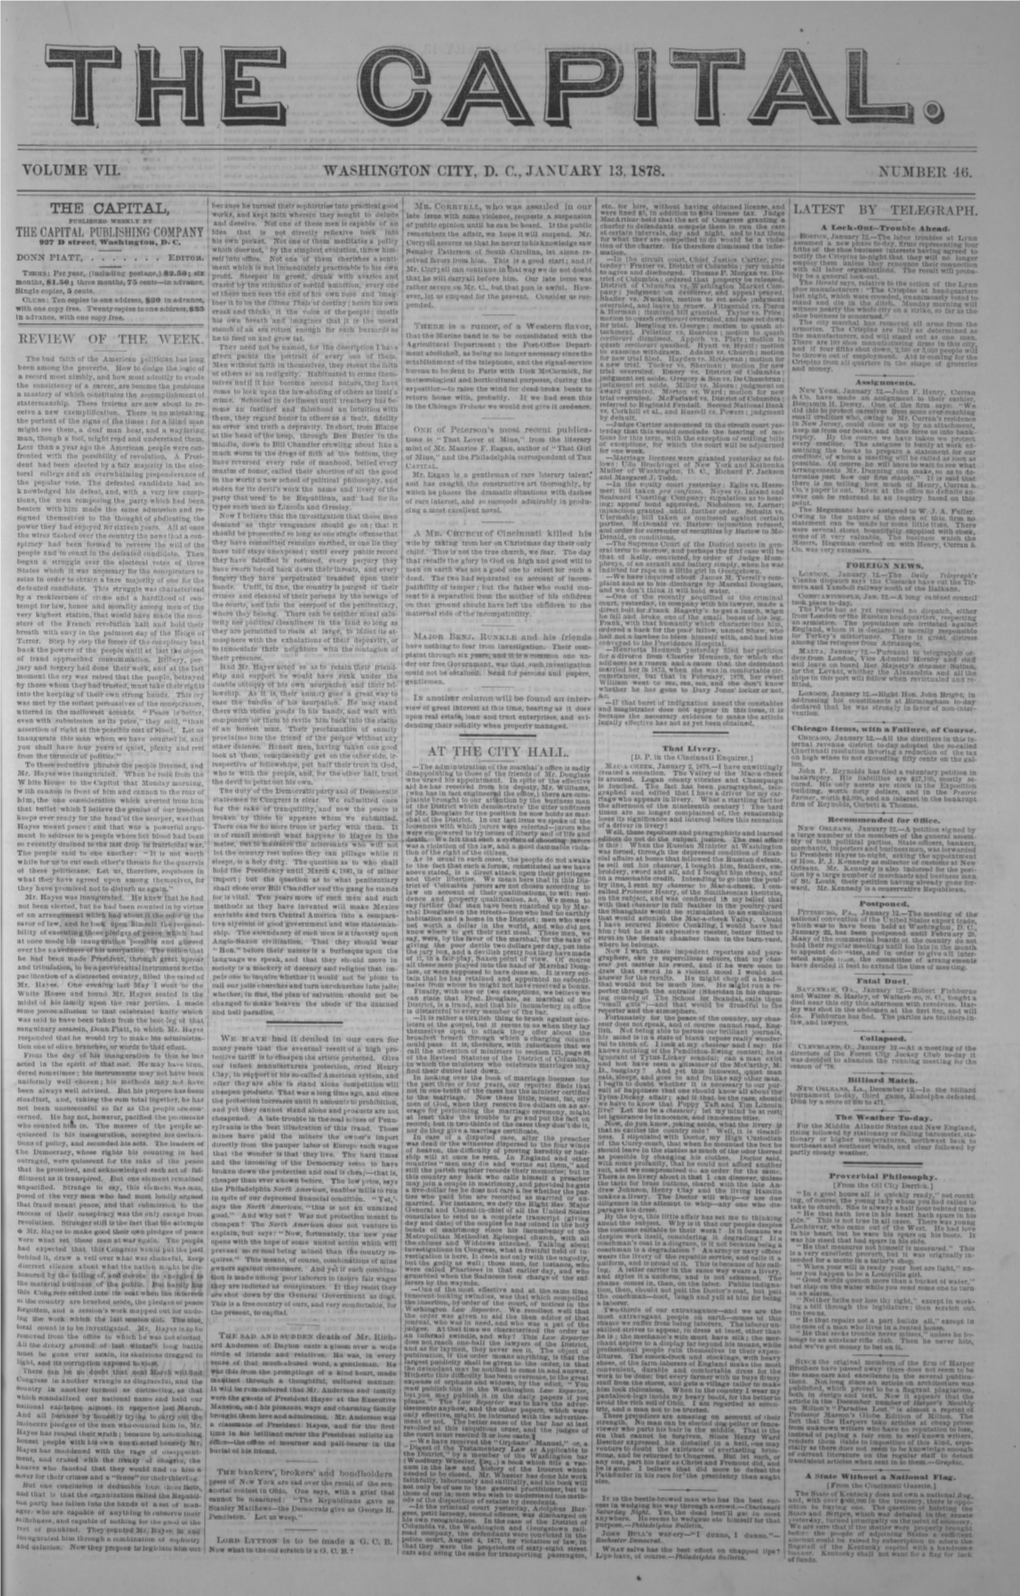 Volume Vii. Washington City, D. C., January 13,1878 Number 46